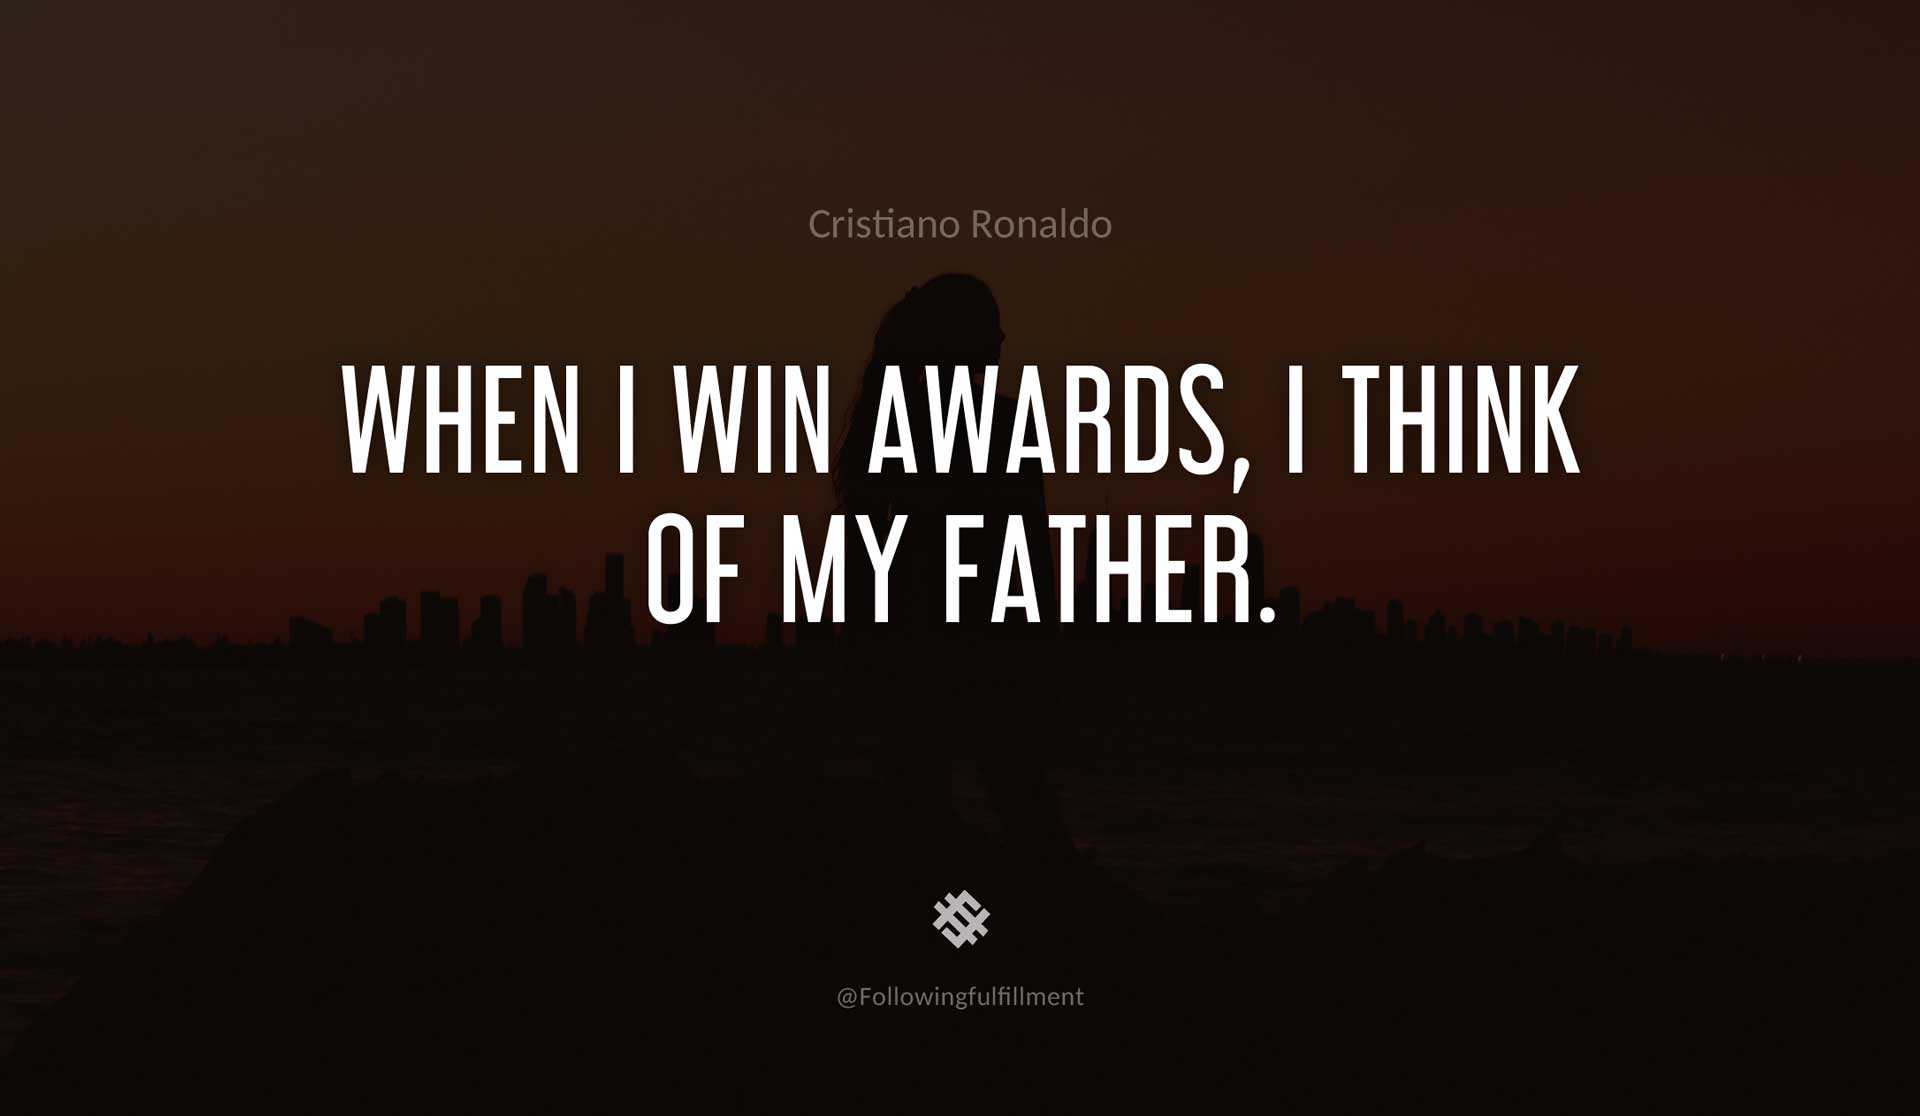 When-I-win-awards,-I-think-of-my-father.-CRISTIANO-RONALDO-Quote.jpg